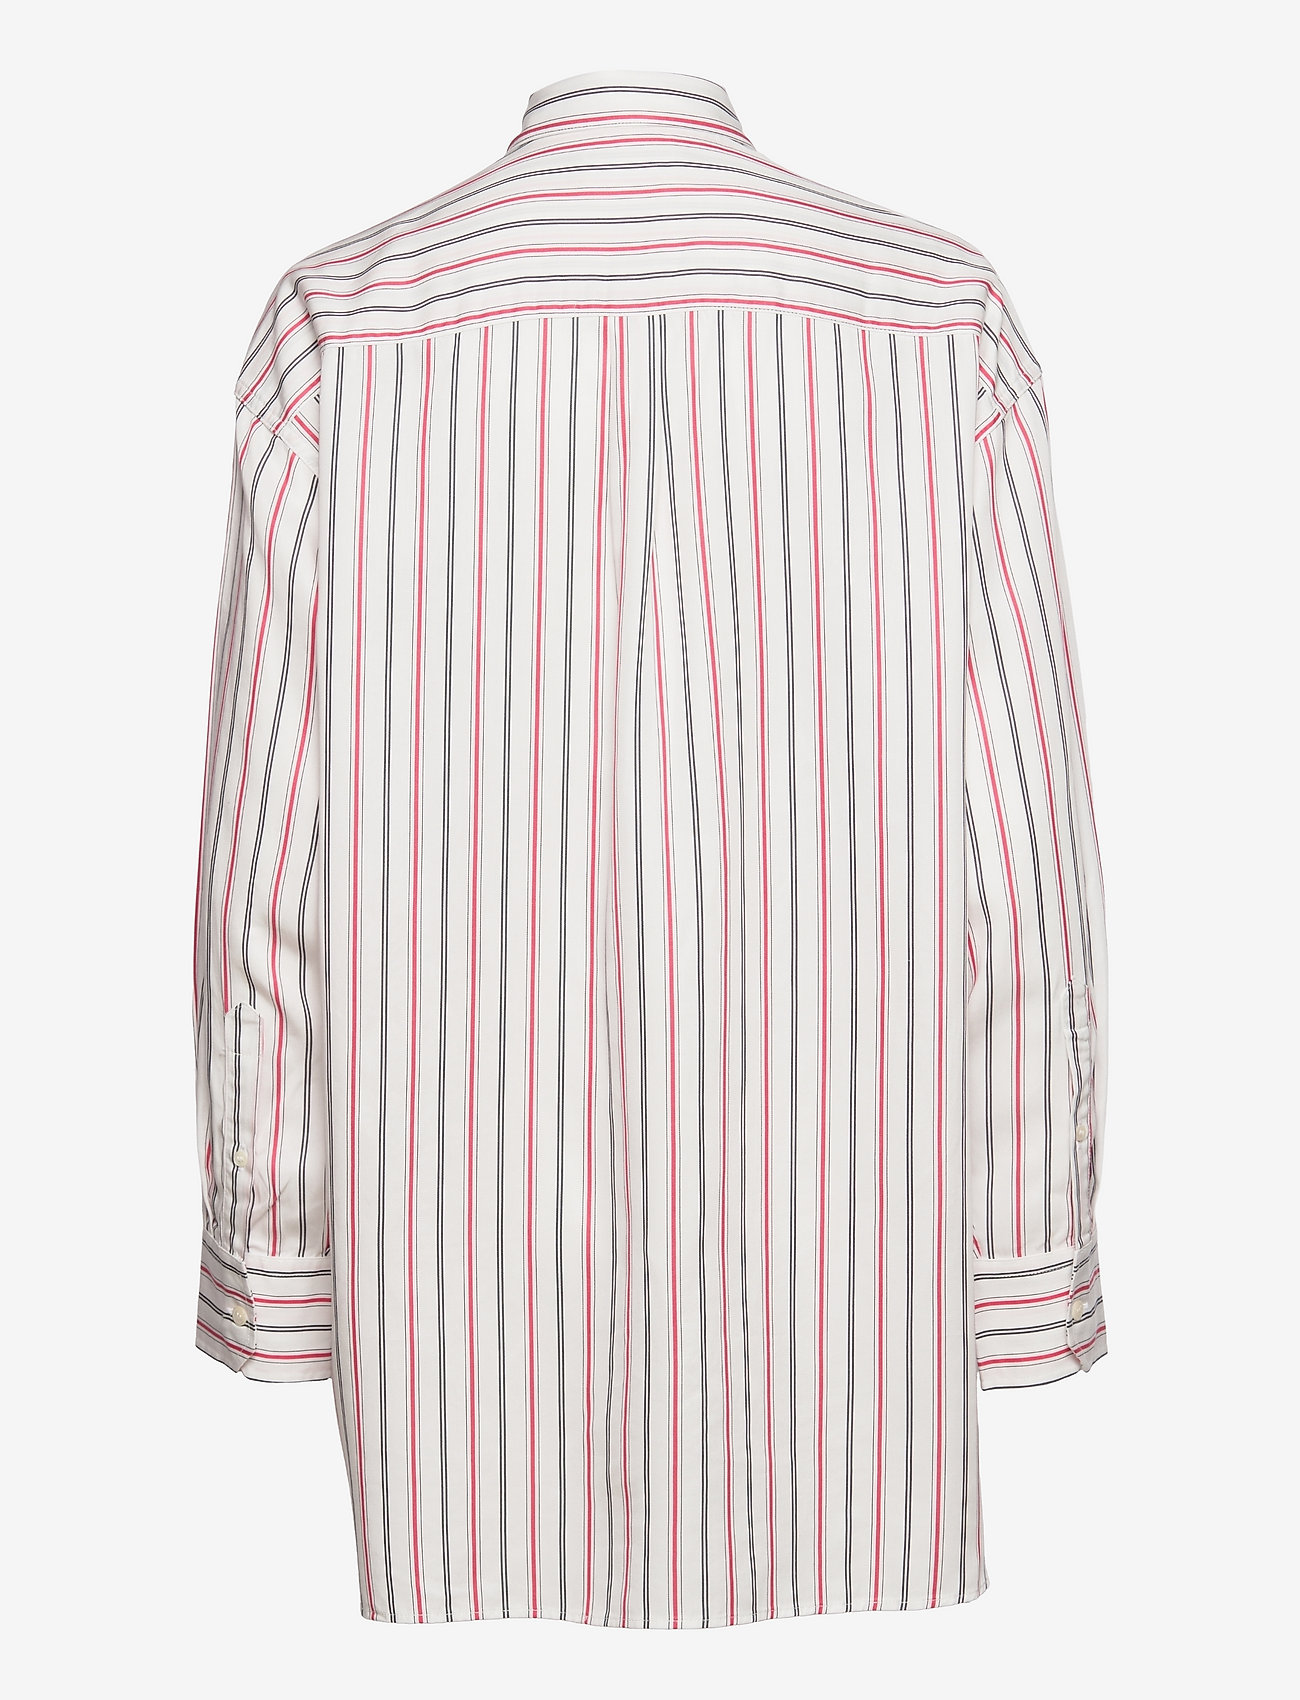 Soulland - Estelle shirt - långärmade skjortor - white/red stripes - 1